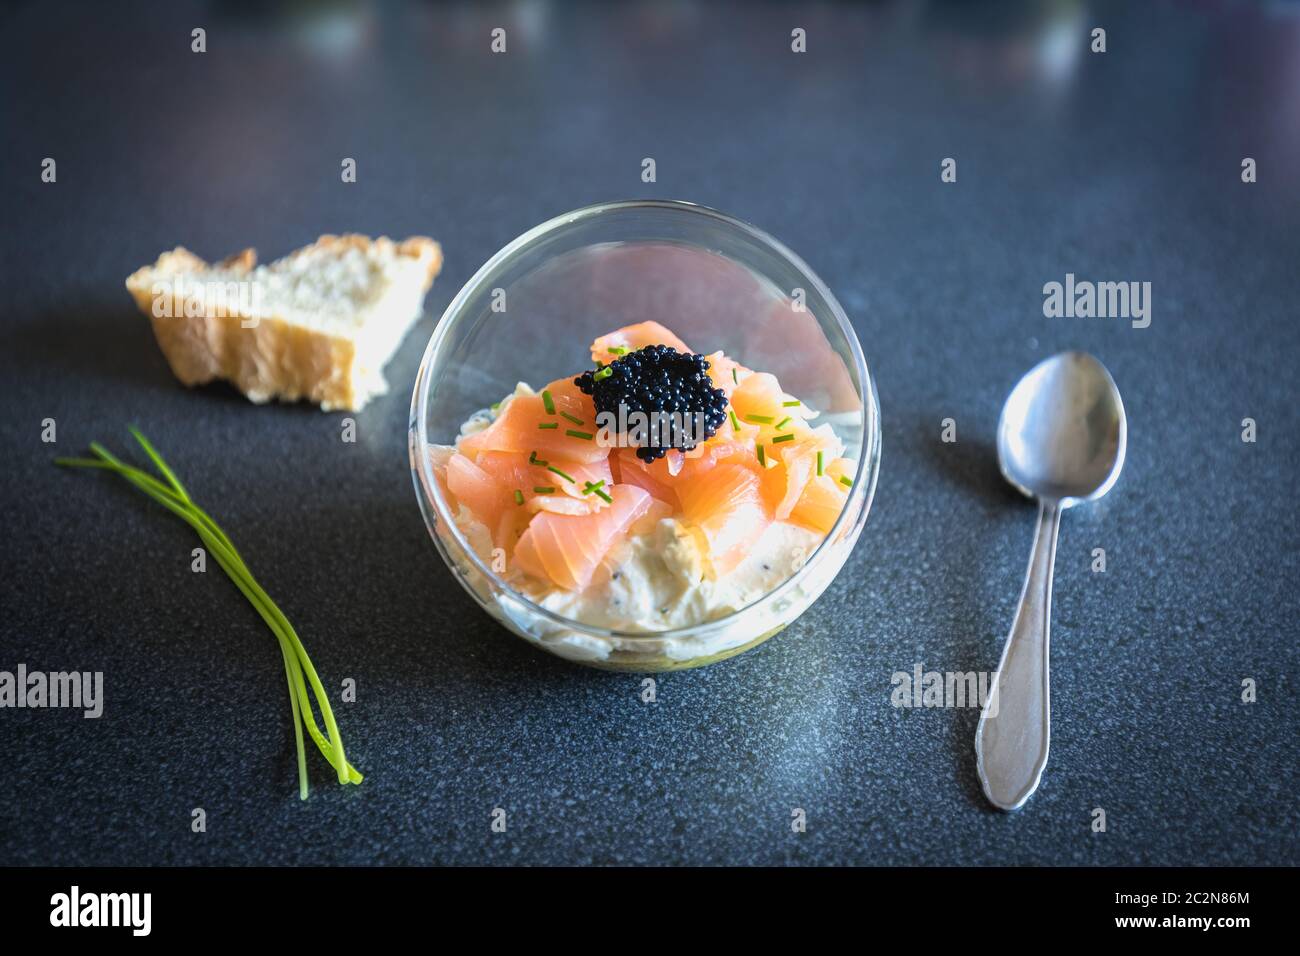 verrine salmon lumpfish egg fresh cheese and avocado bed in the kitchen Stock Photo